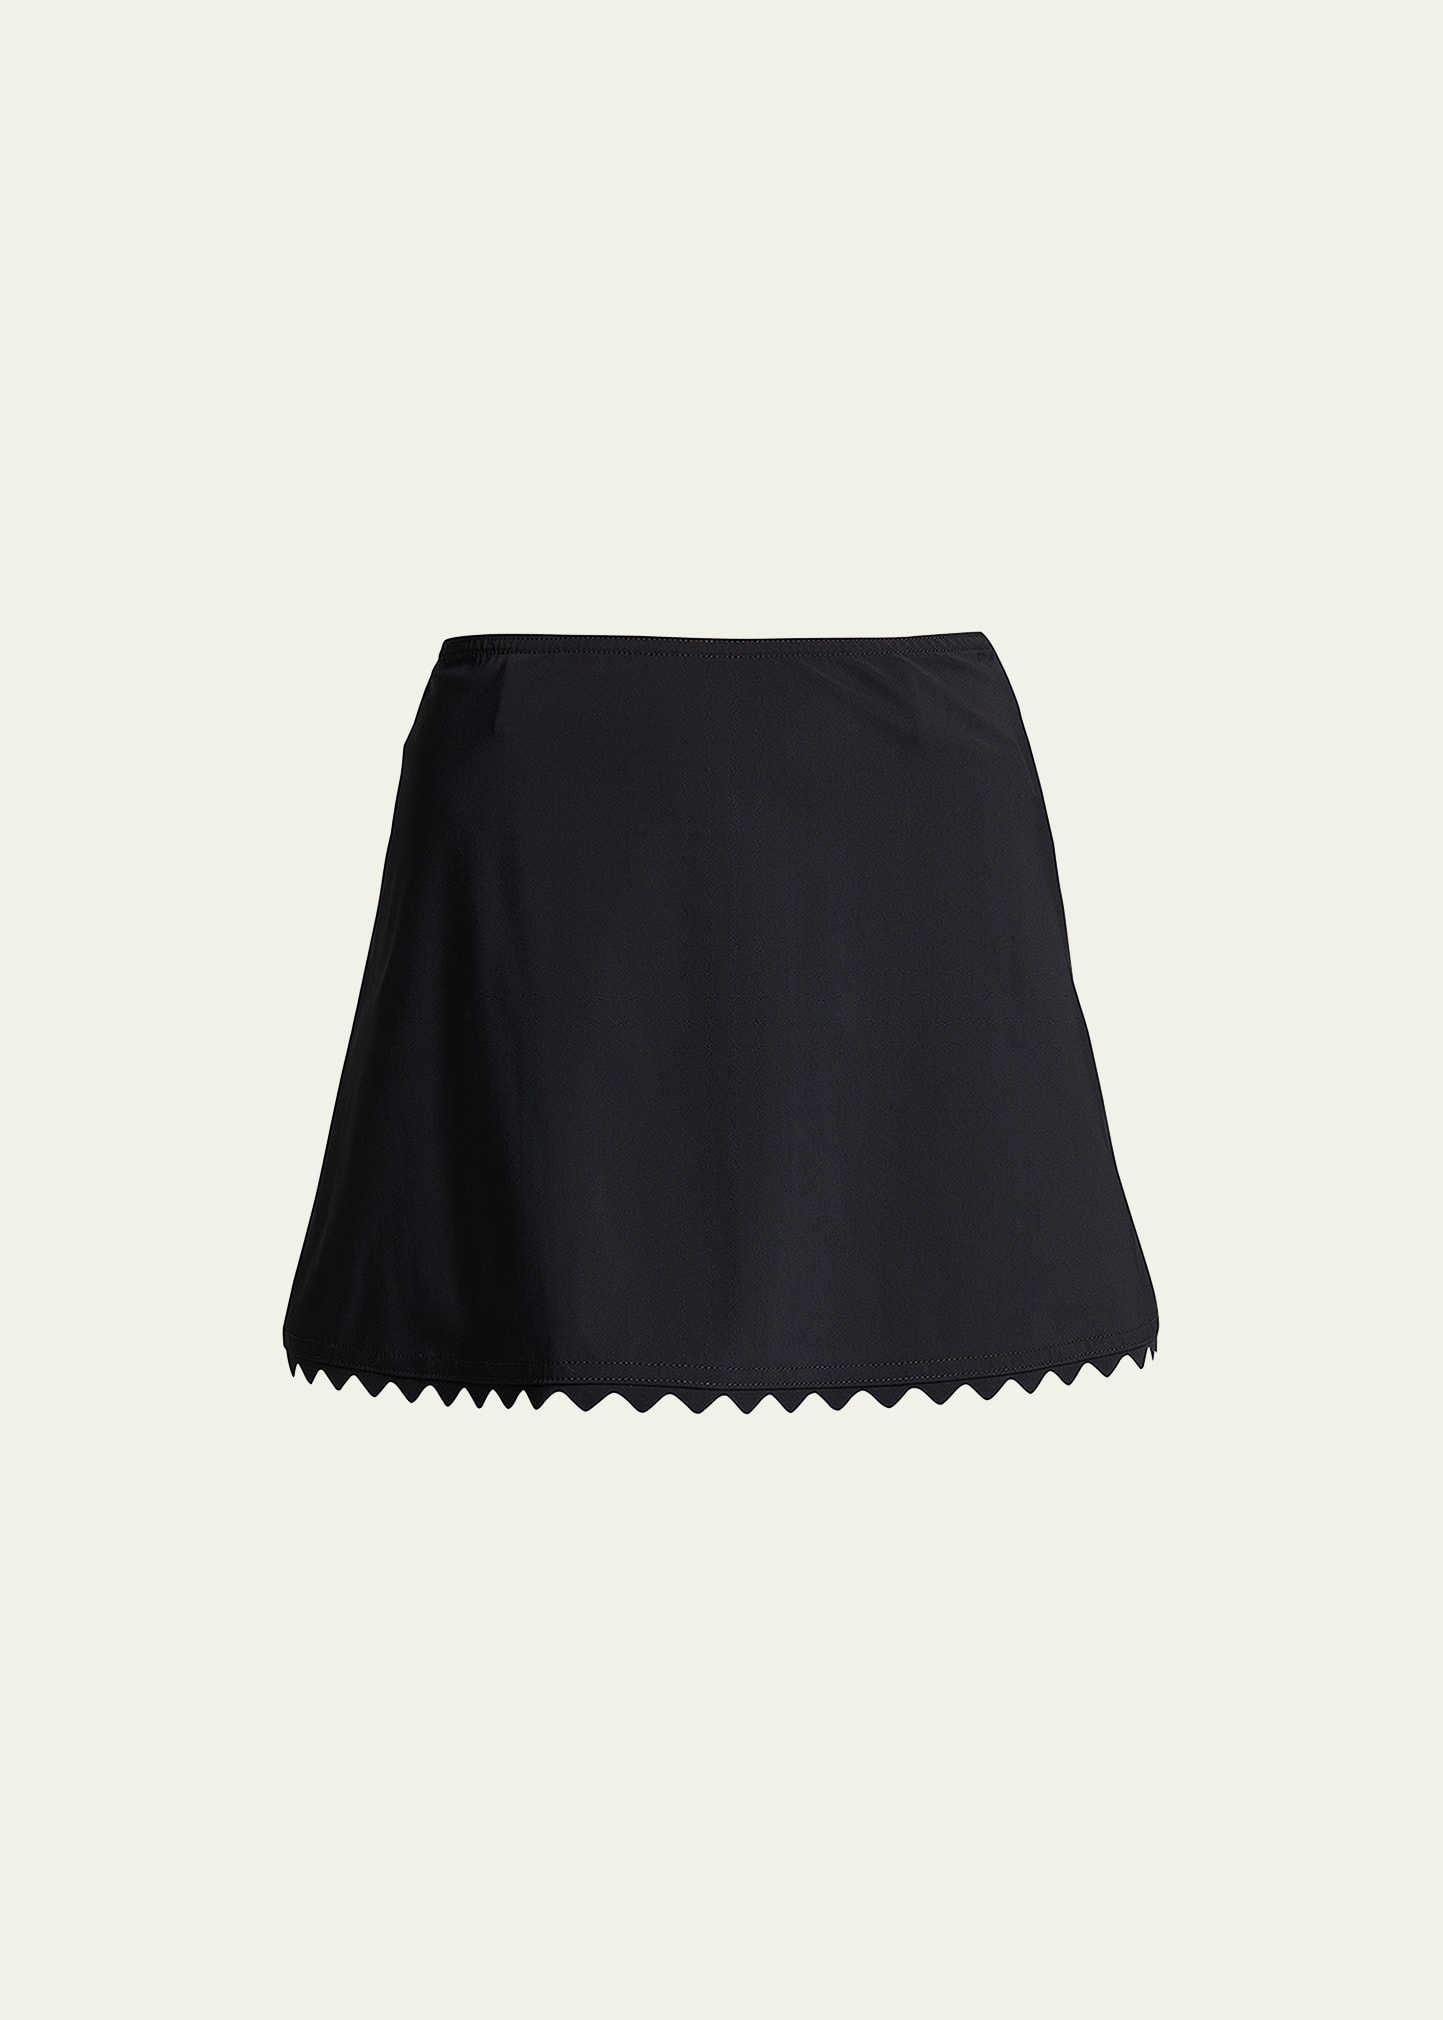 Karla Colletto Ines Coverup Mini A-line Skirt In Black